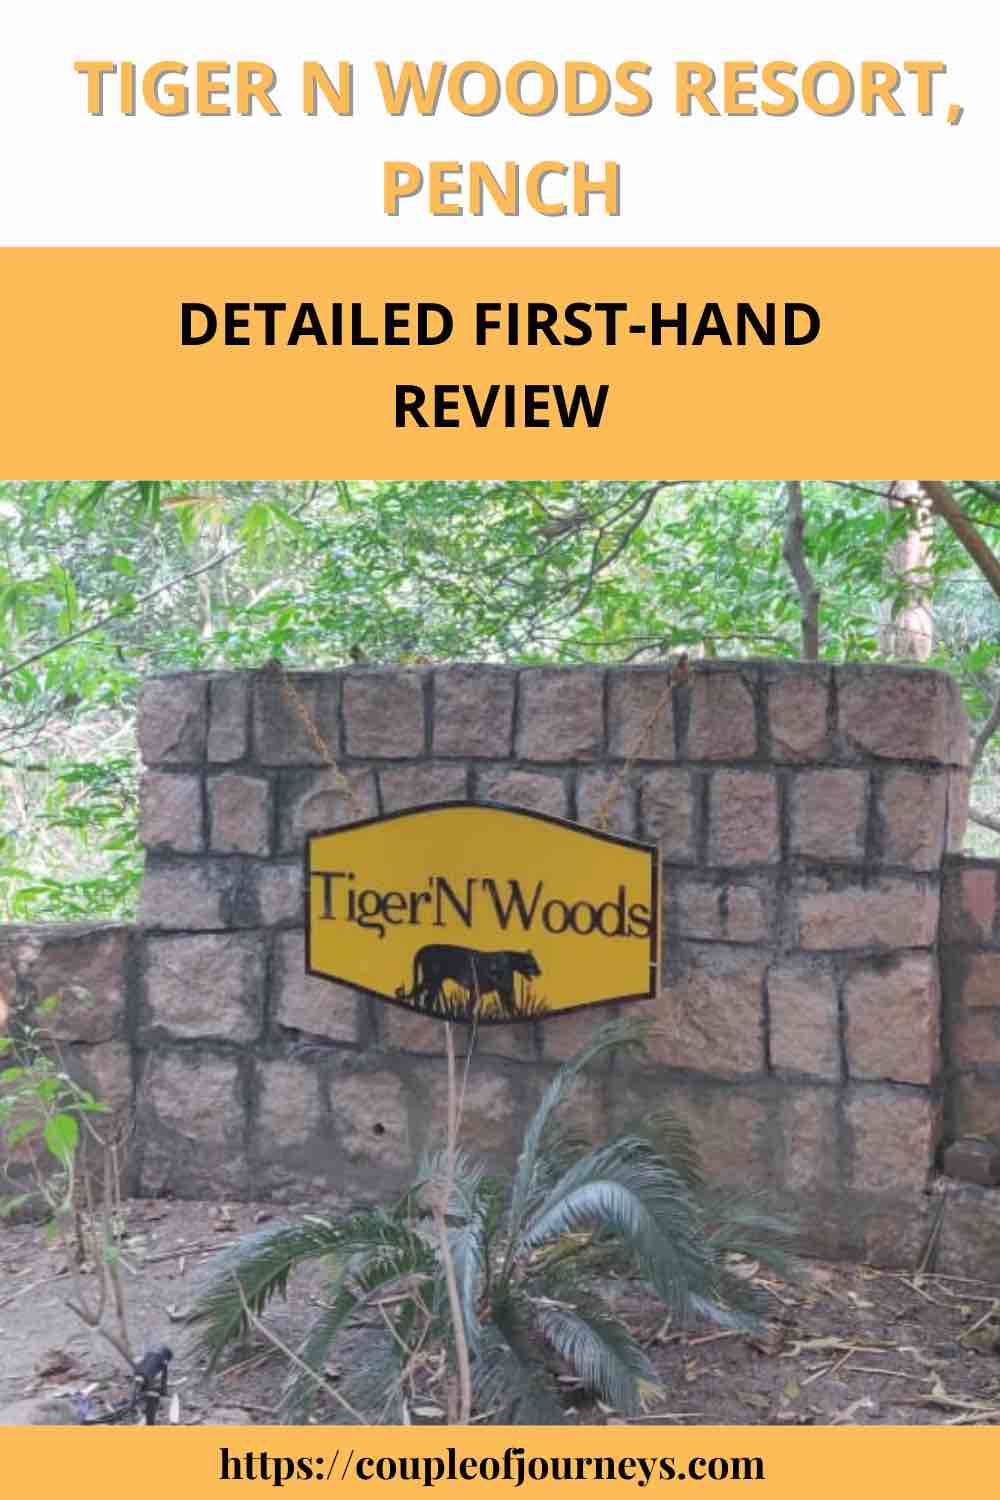 Tiger N Woods Resort, Pench - Pin it